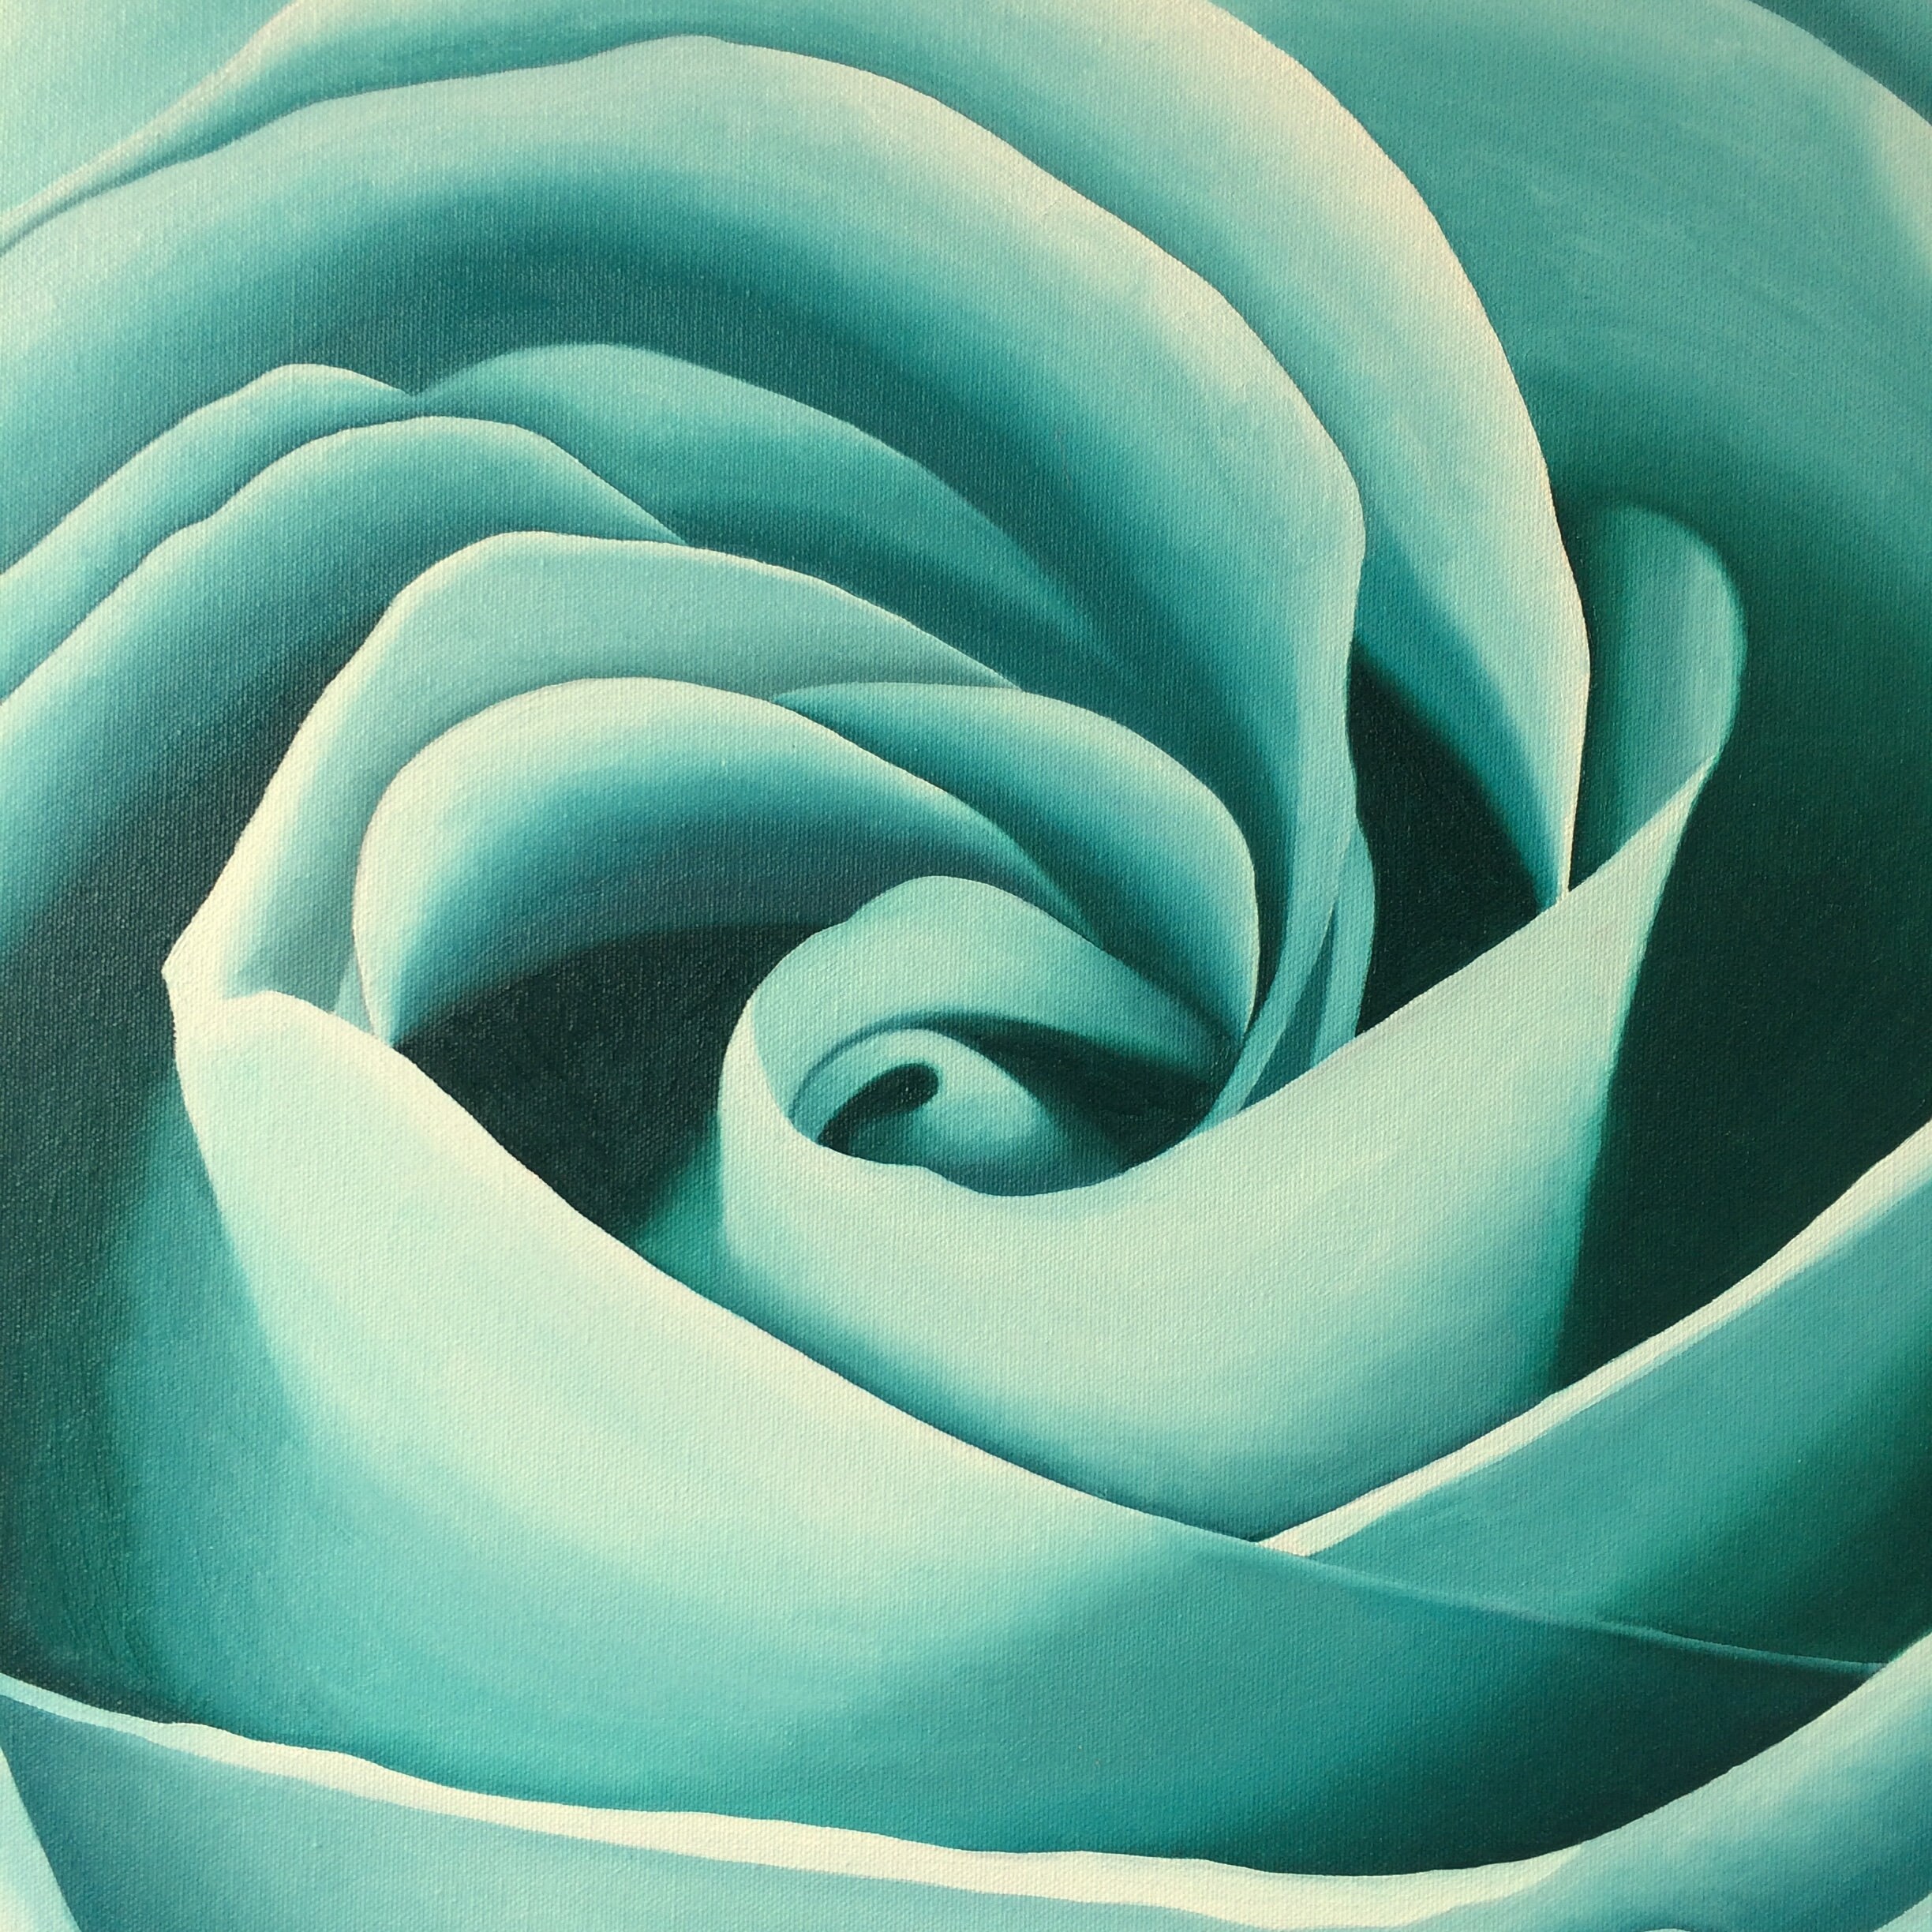 Aqua Rose Original Oil Painting Large Square Jade Mint - Etsy